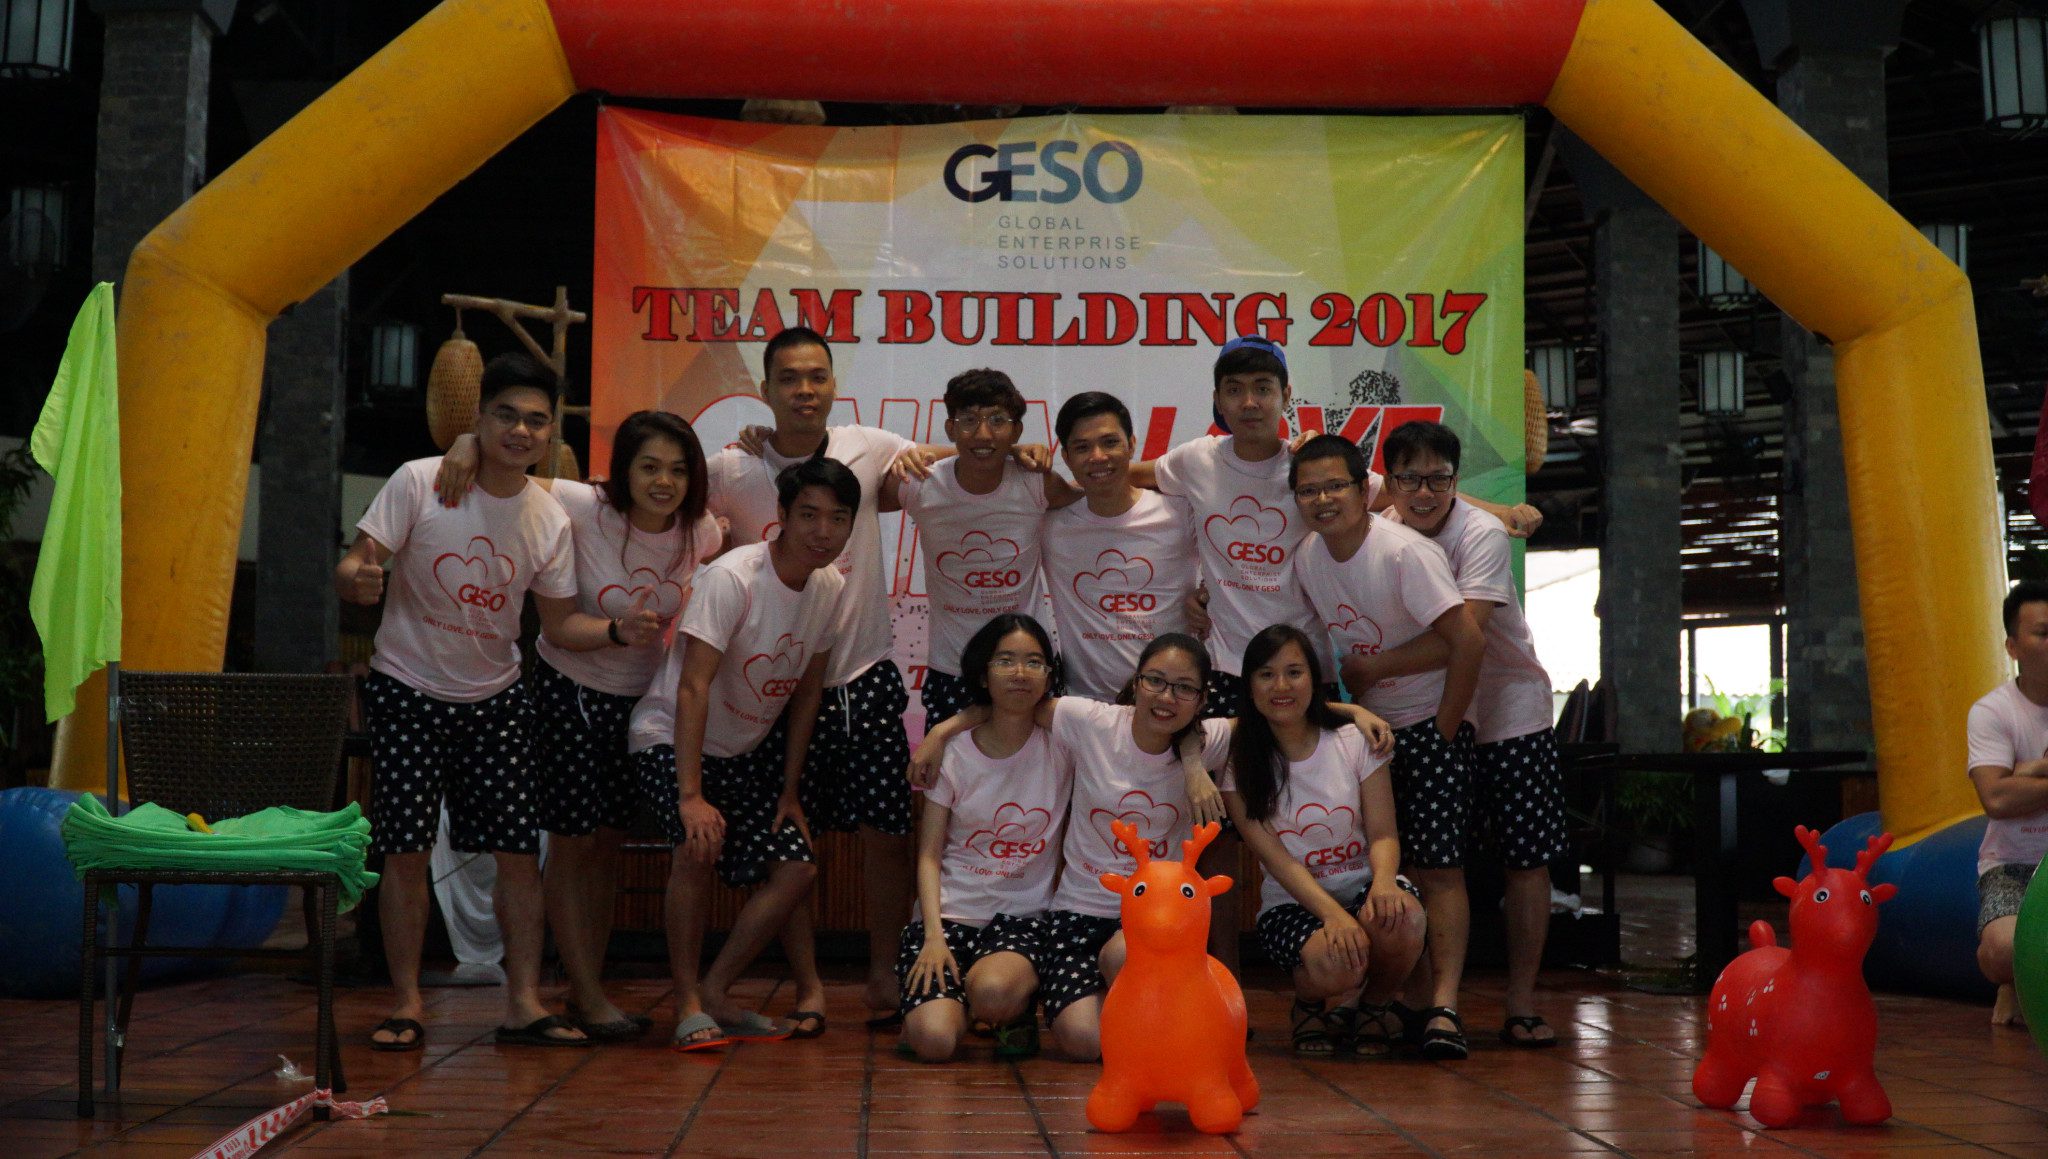 Áo thun team building - Công ty Geso - geso10